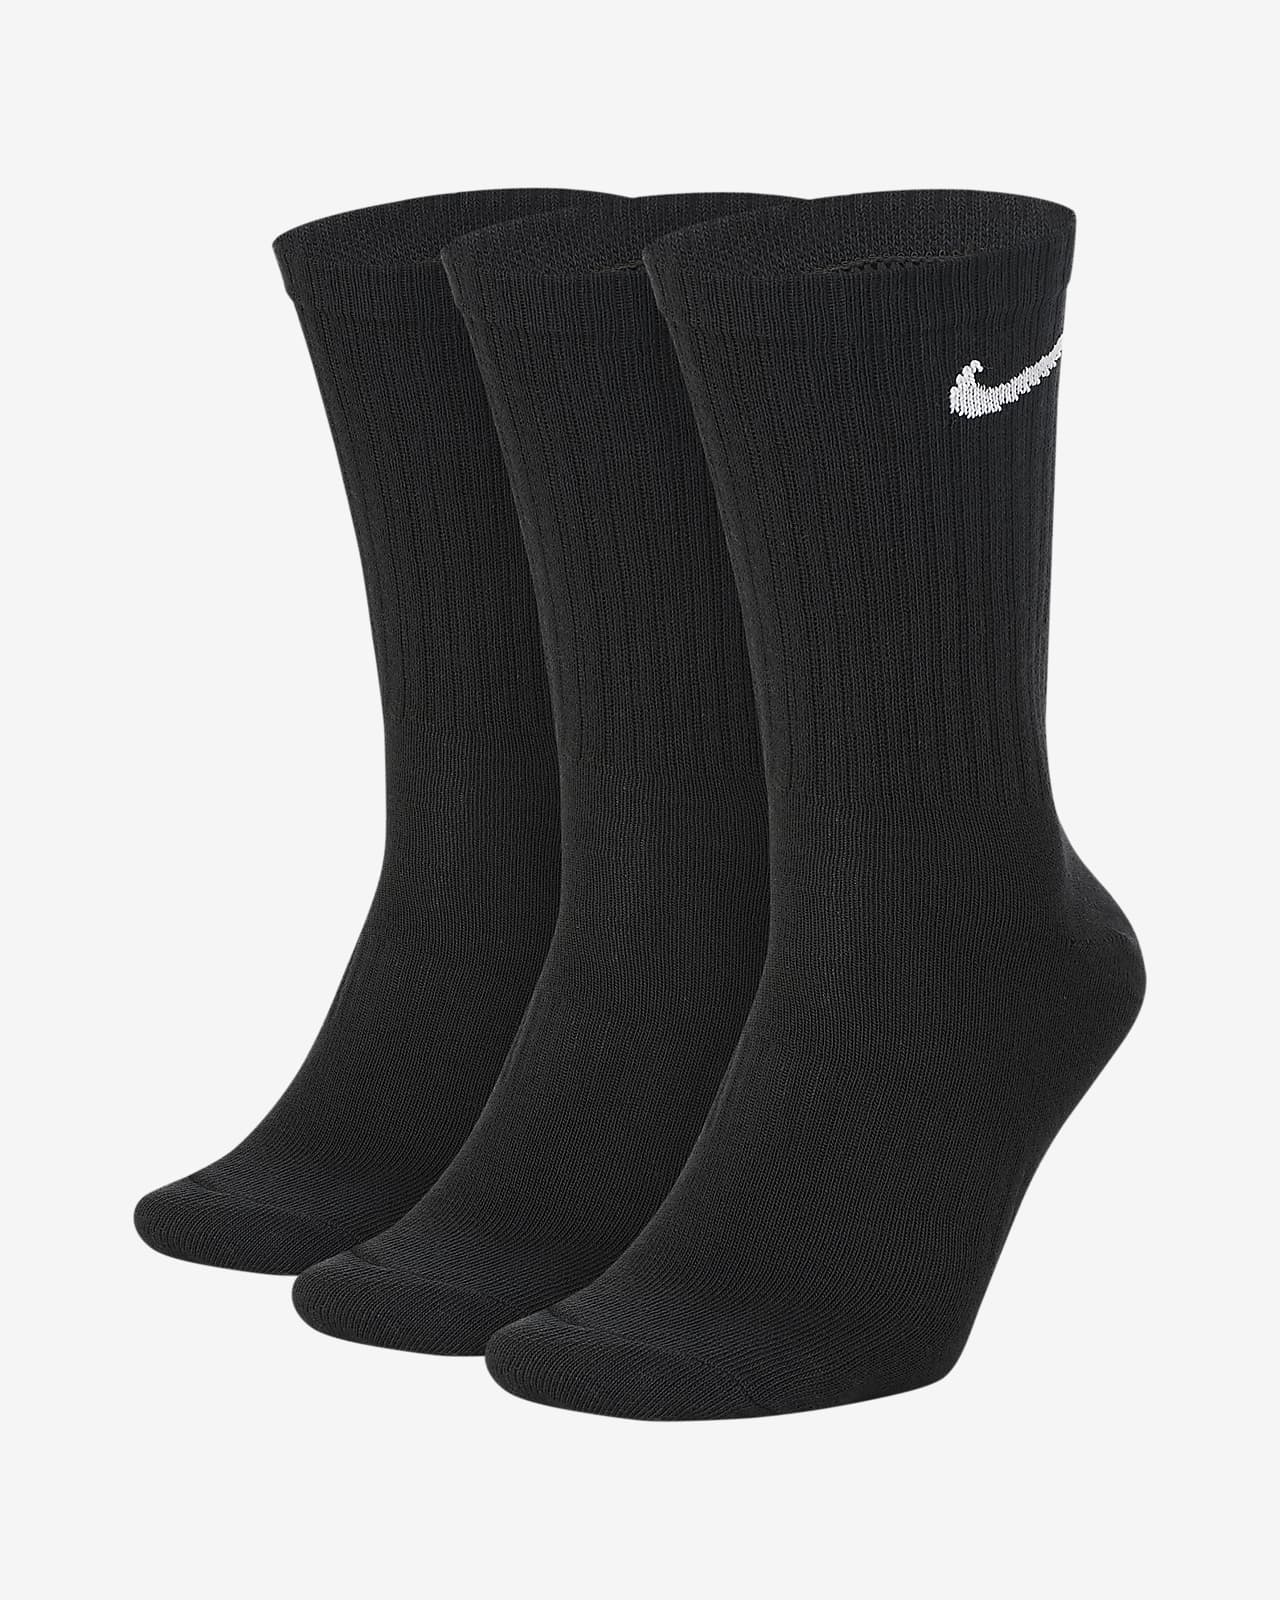 nike black ankle socks mens